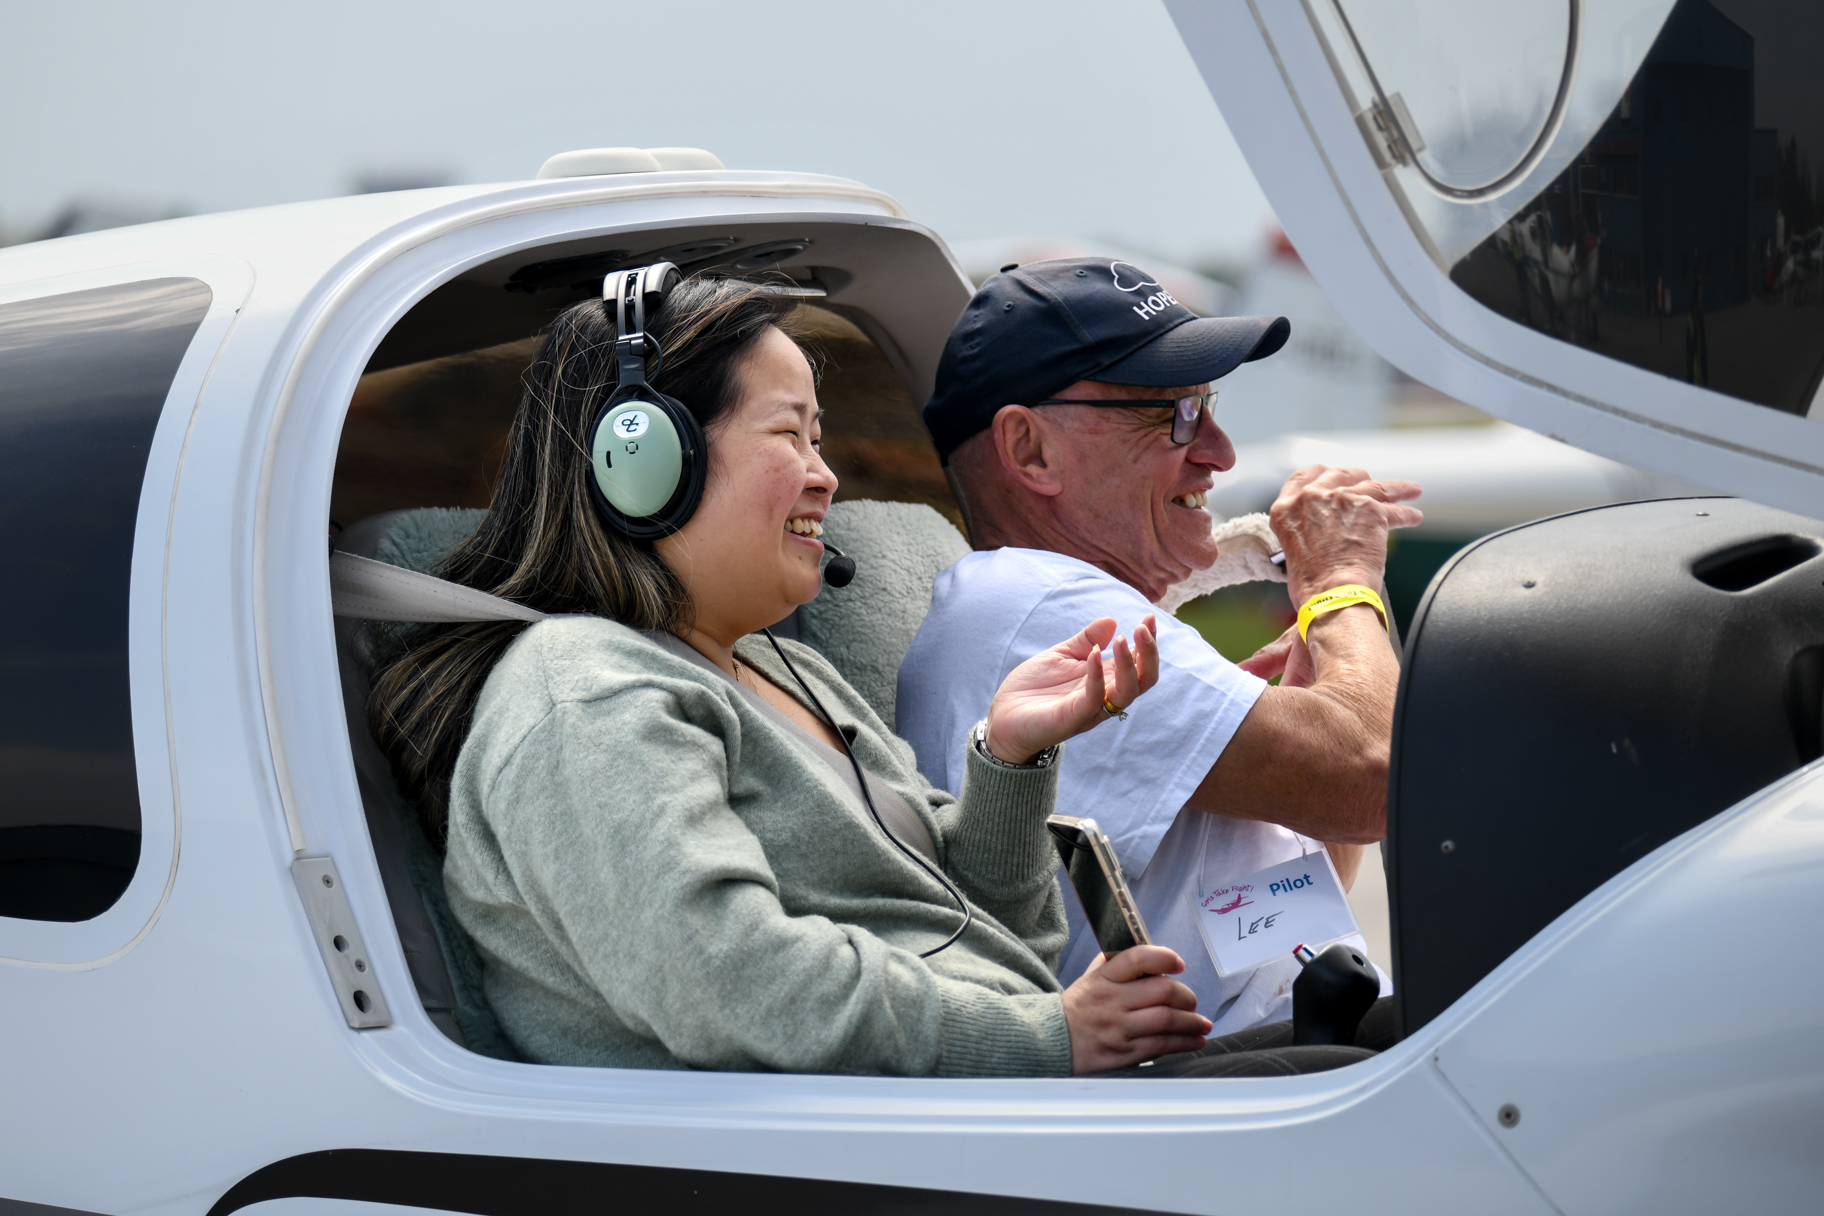 Event attendee experiences the joy of flight. Photo credit Gus & Clara - Gusair